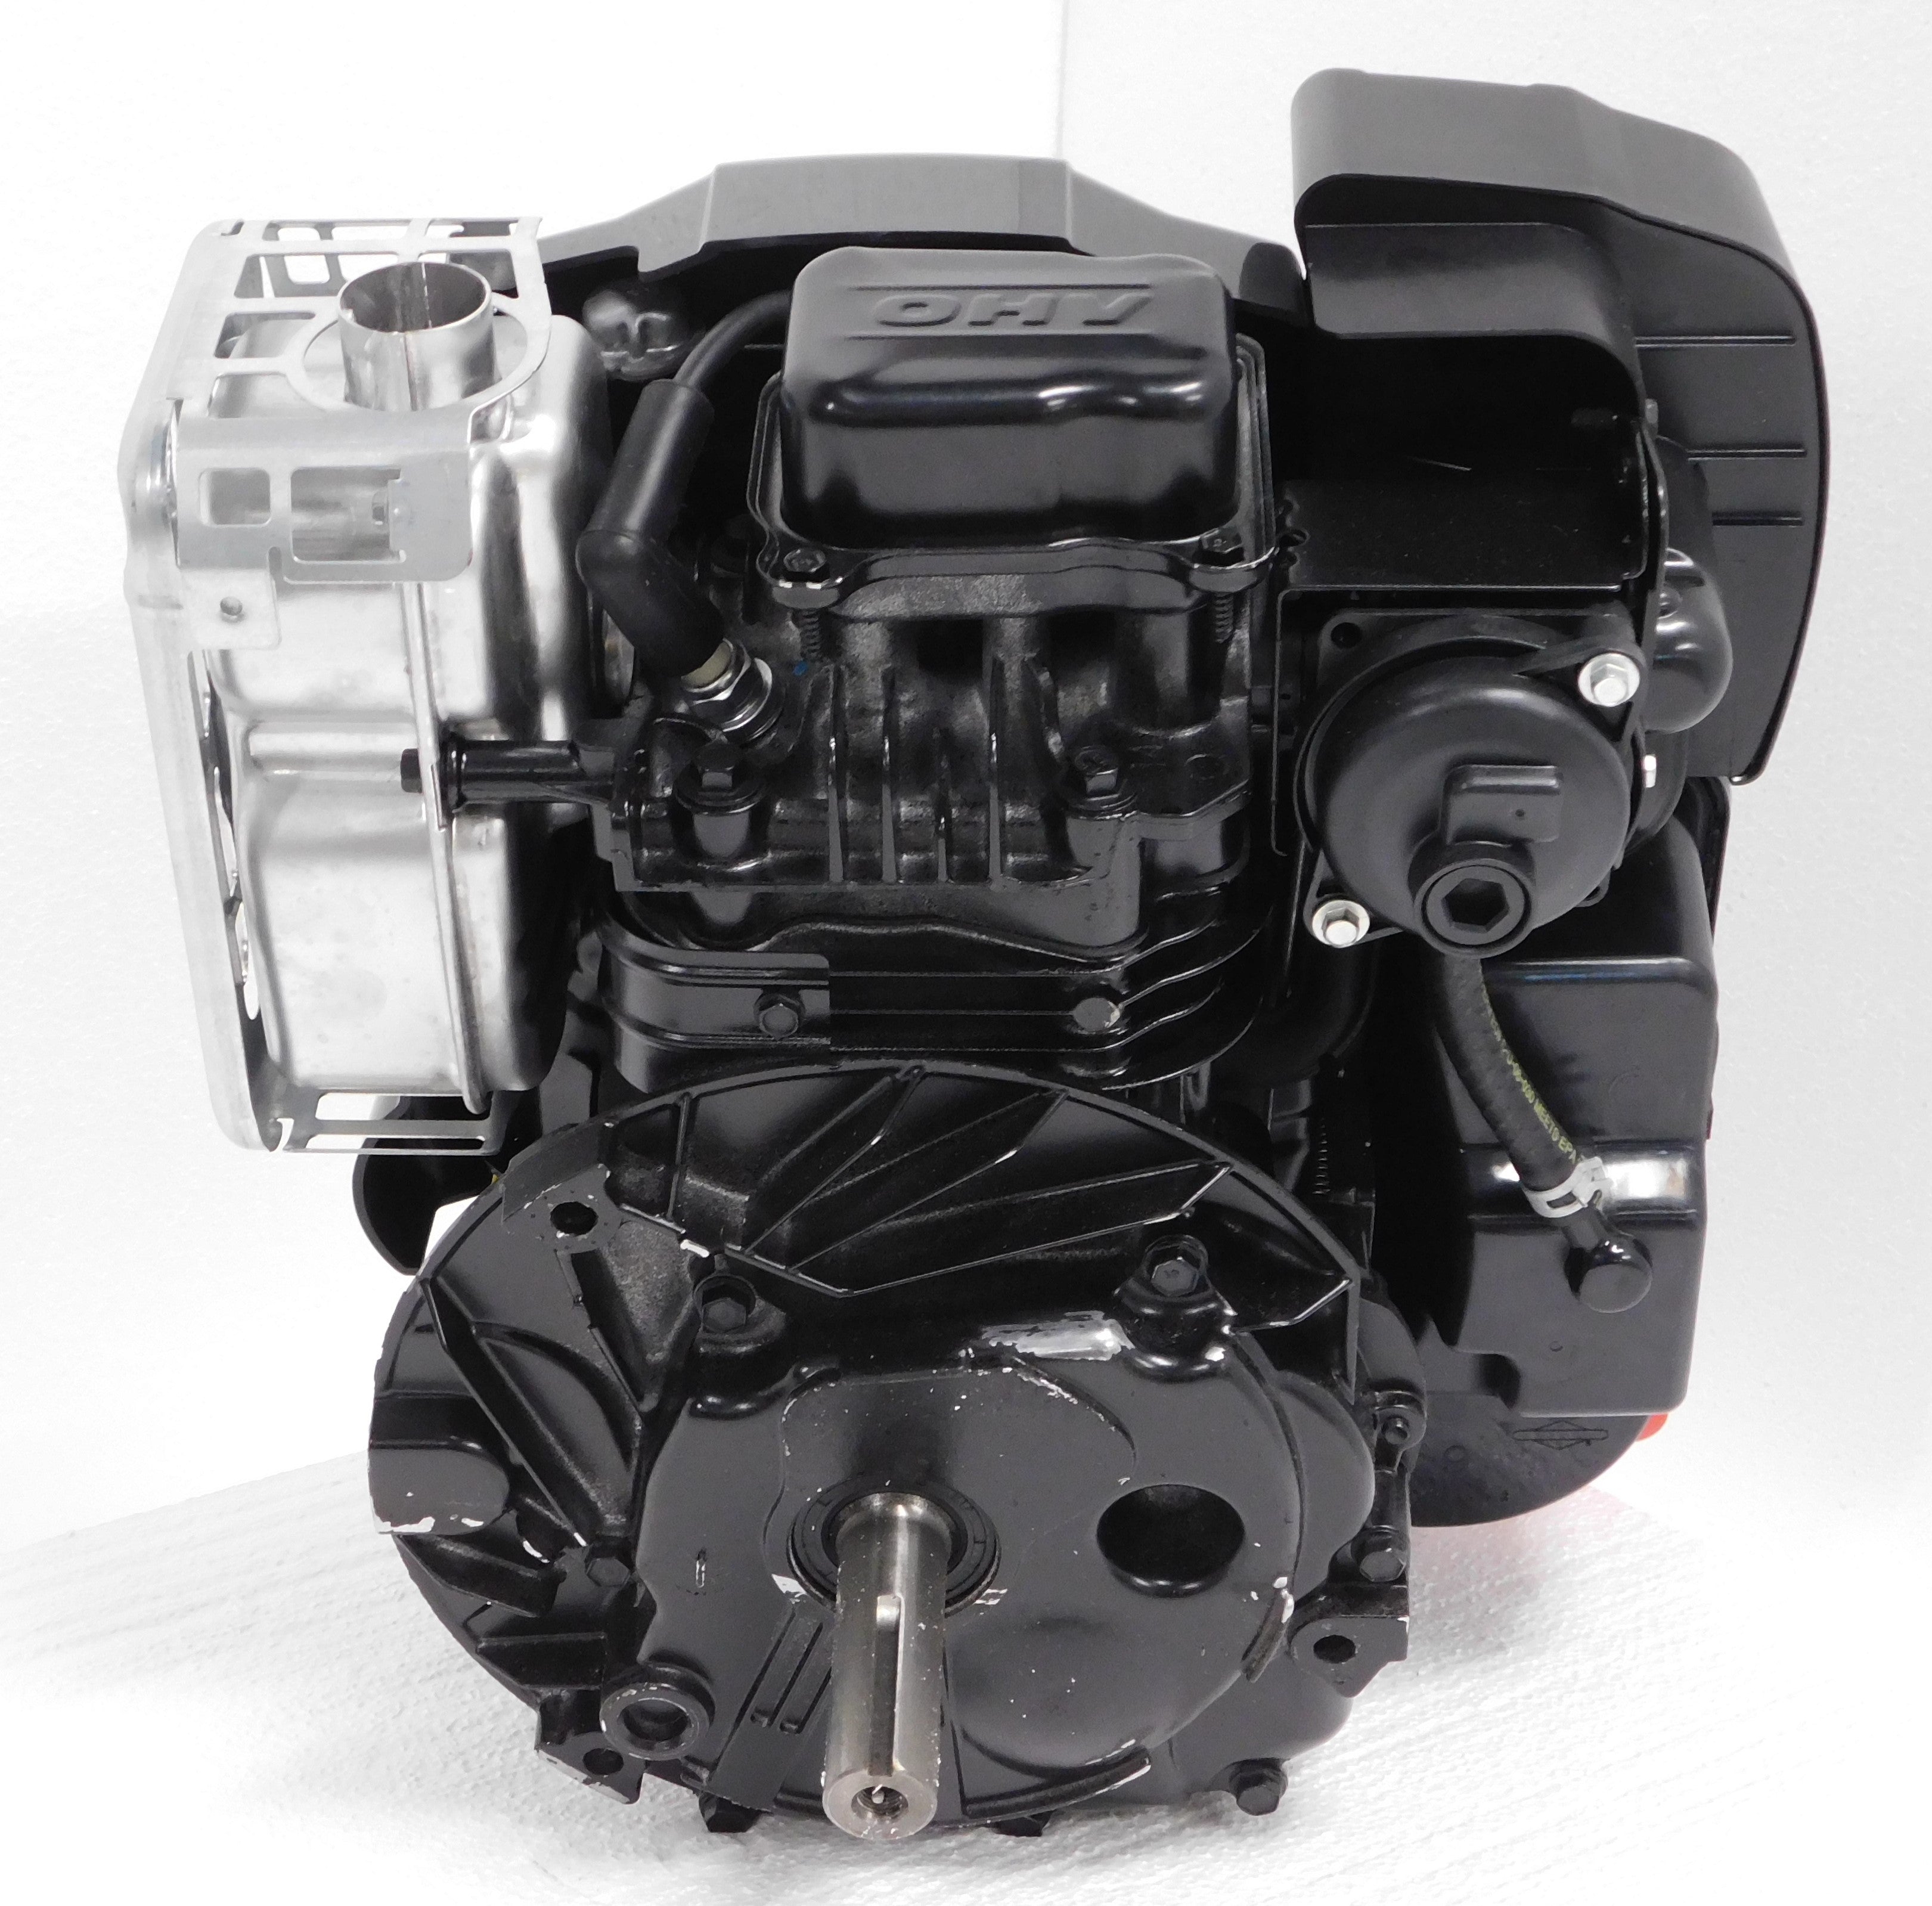 Briggs & Stratton 8.5 TP Professional Series Engine 7/8" x 3-5/32" Vertical Shaft #123P02-0080